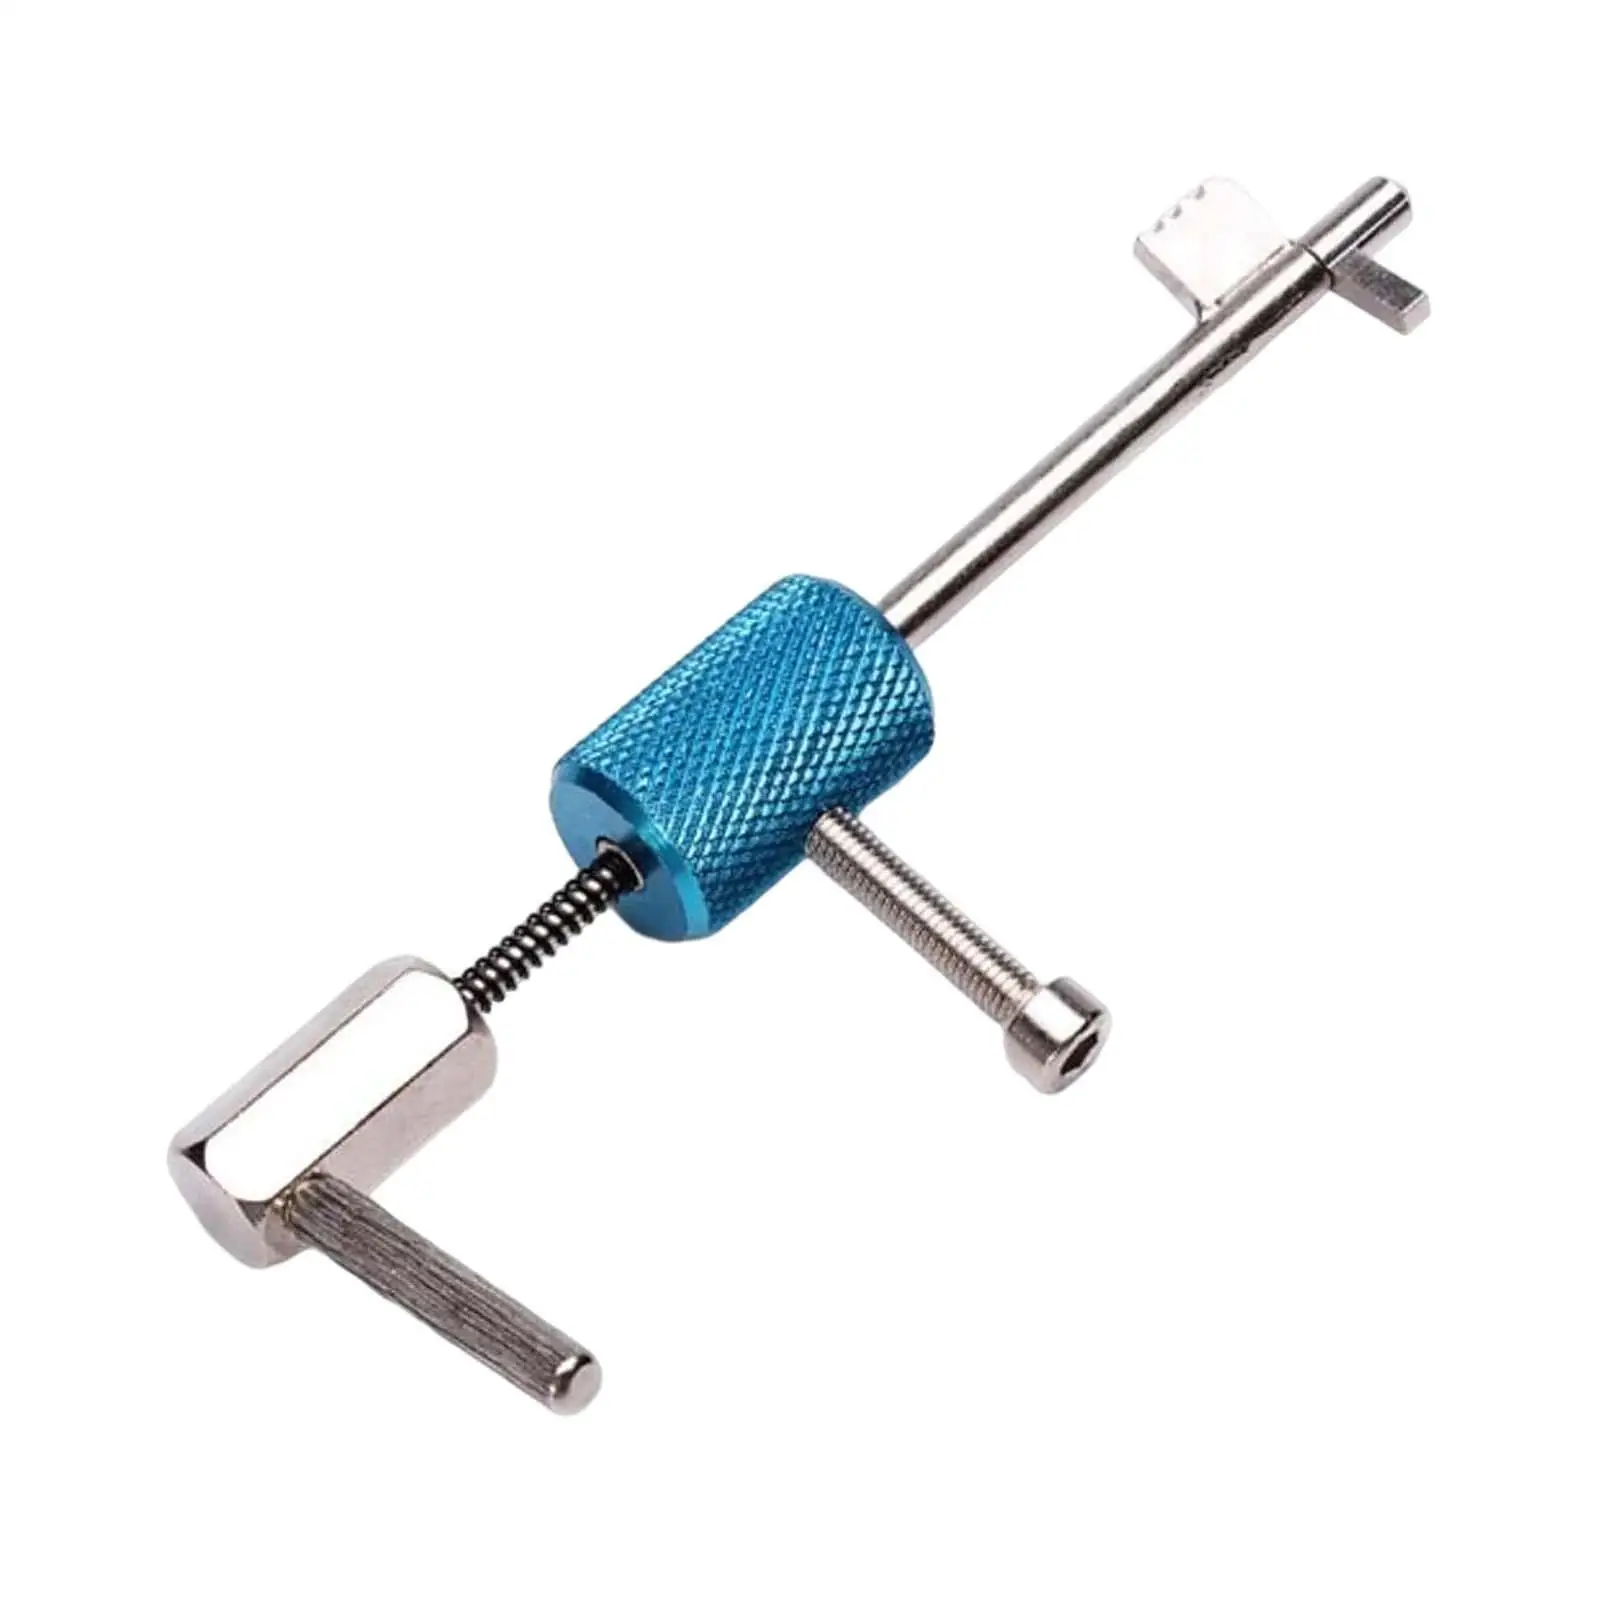 

Tool Lock Household Easy Tool Lock Opener Openning To Stainless Use Civil Picks Locks Hand Wrench Steel